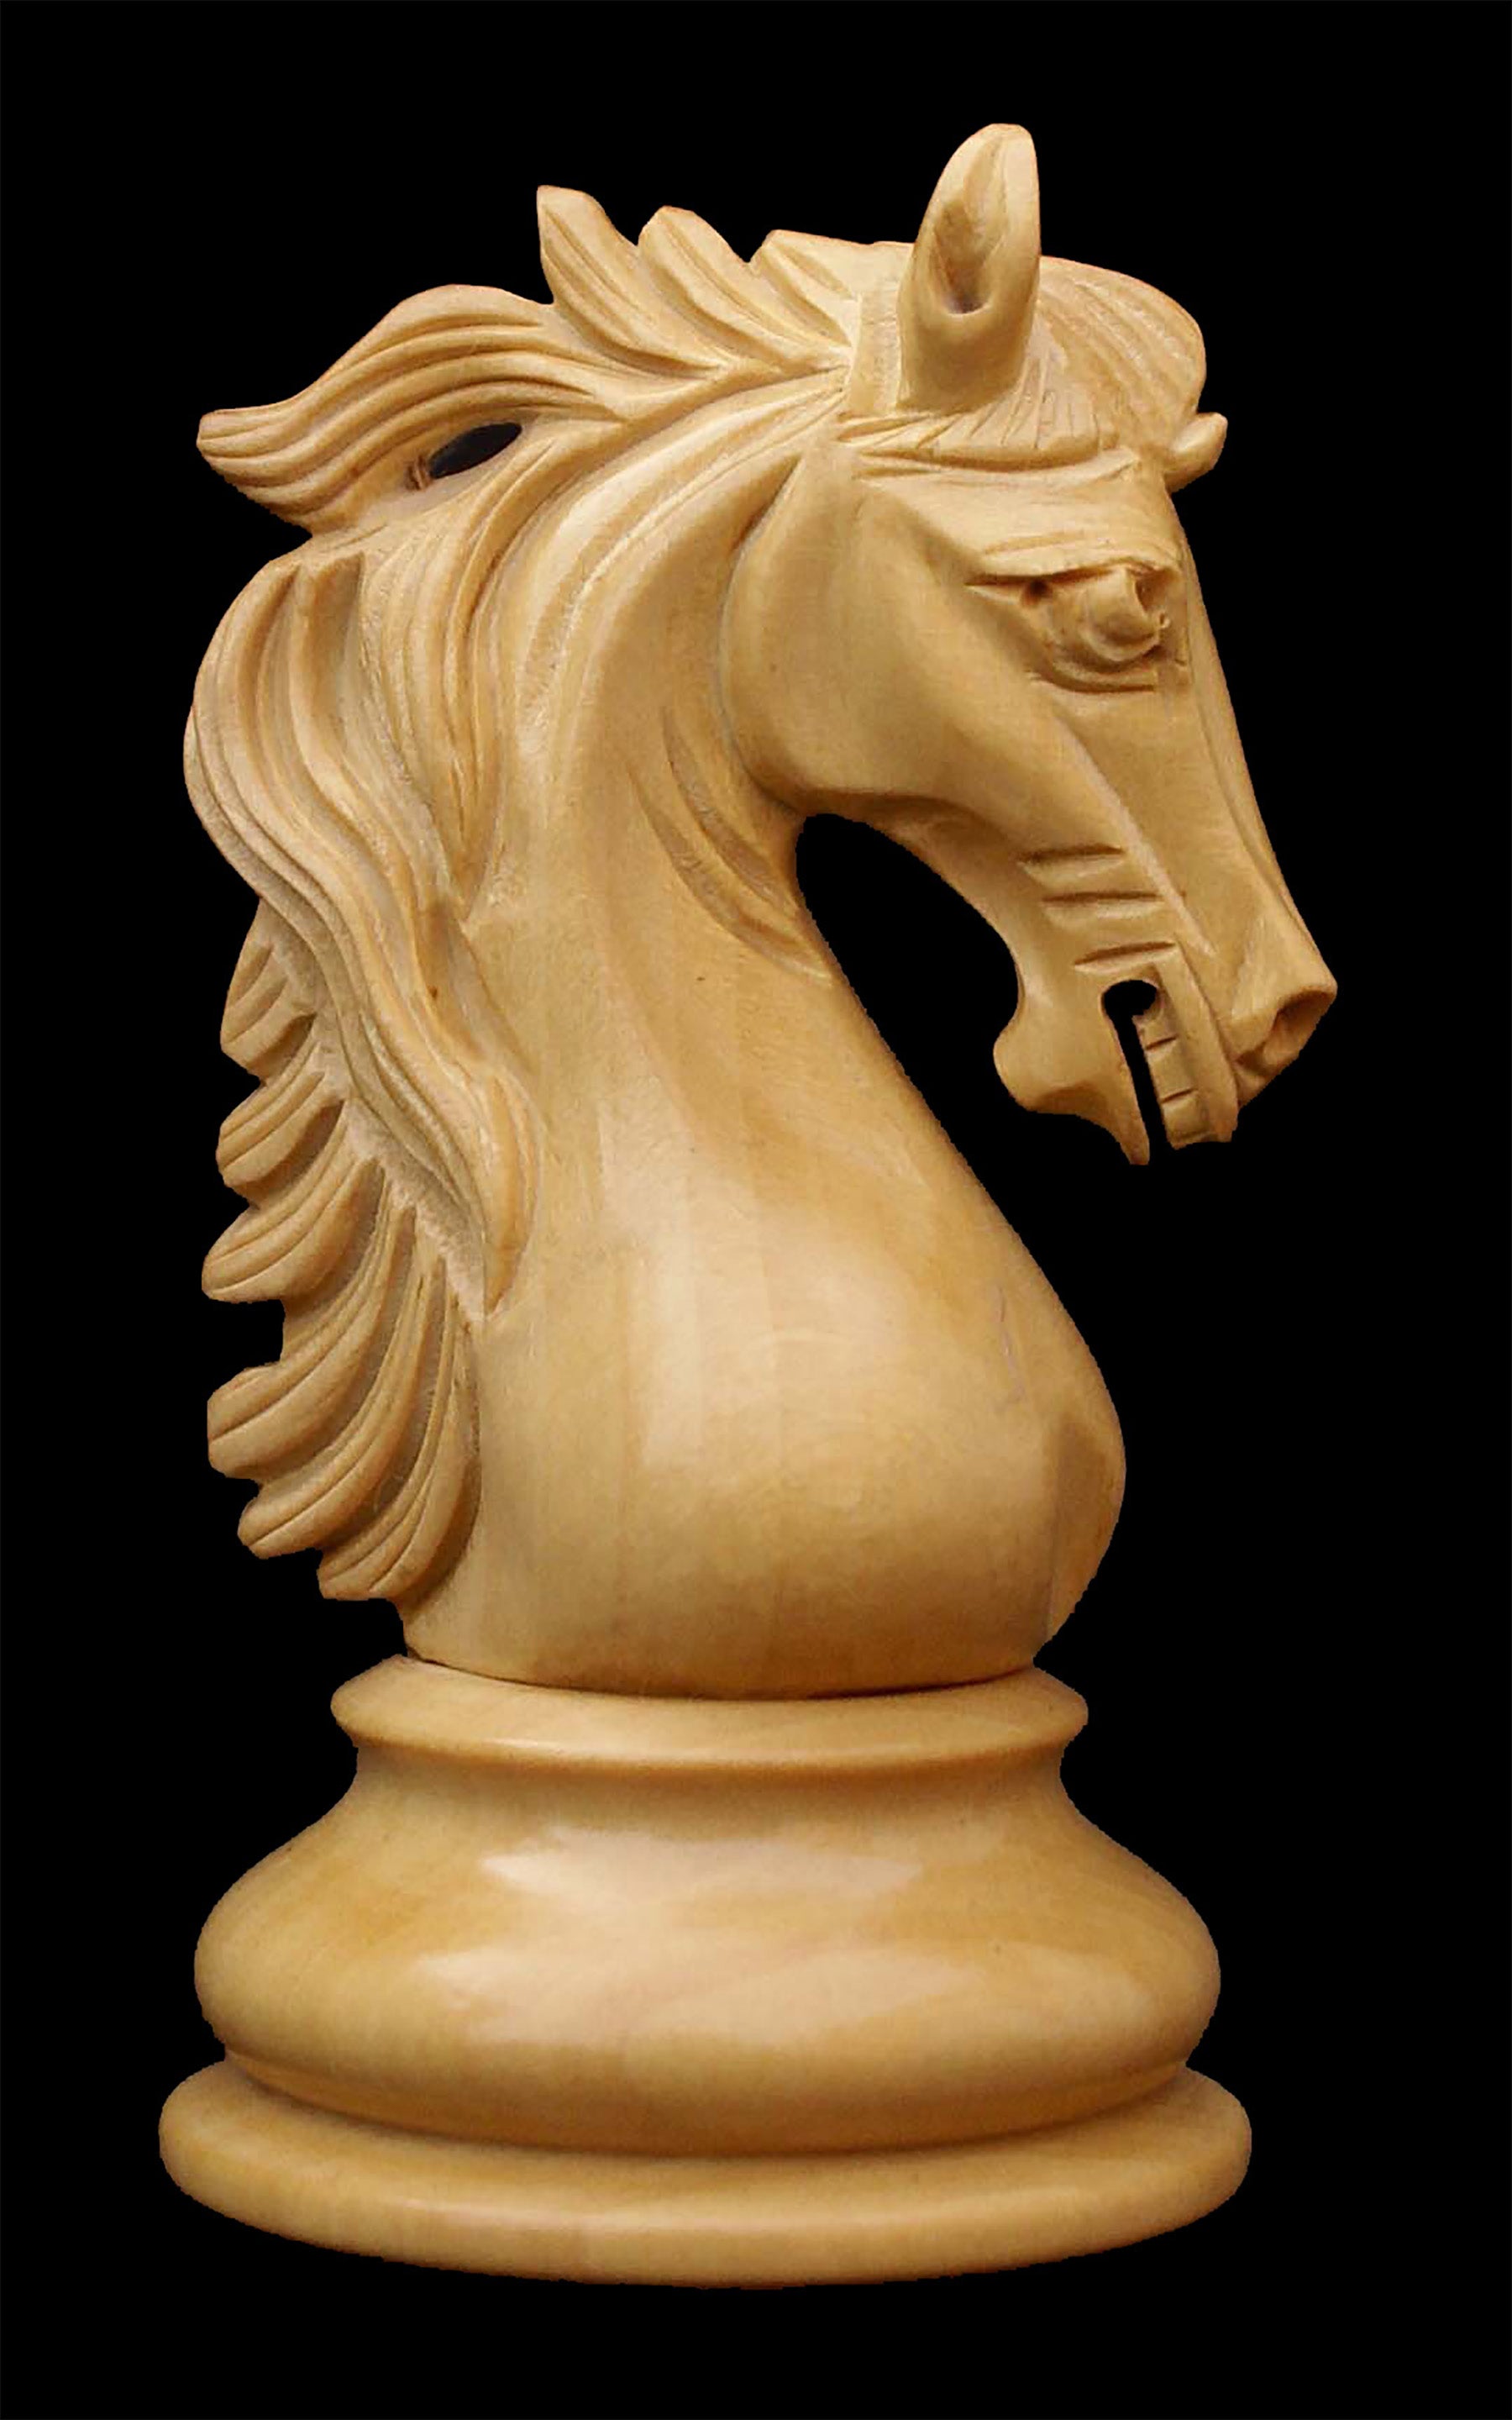 Heritage Series 4.4" Premium Staunton Ebony wood  Chess Set